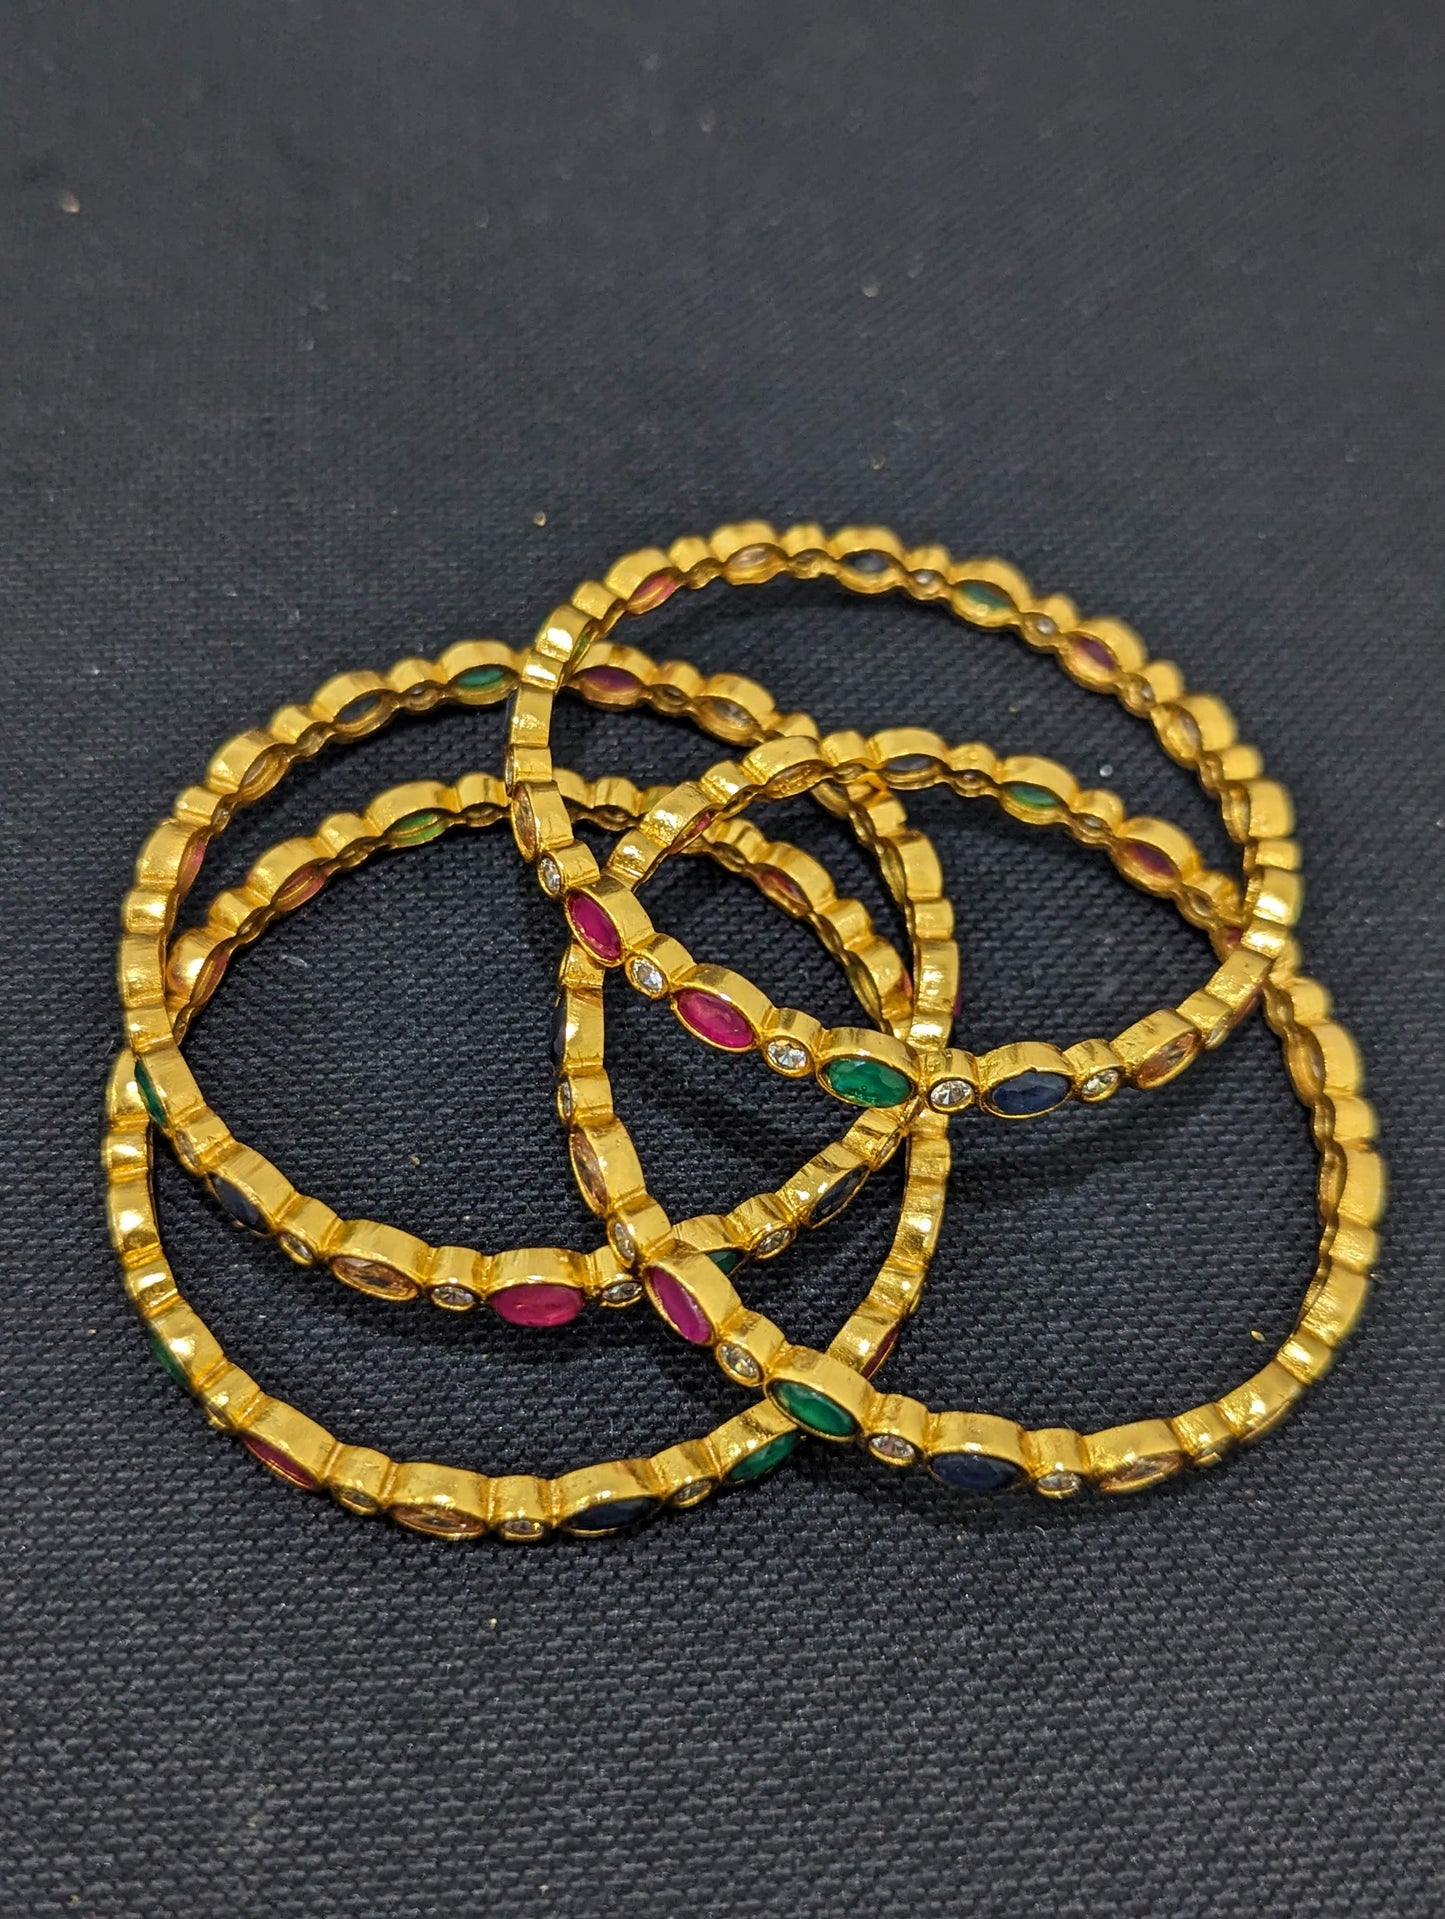 Oval CZ stone Antique gold bangles - Set of 4